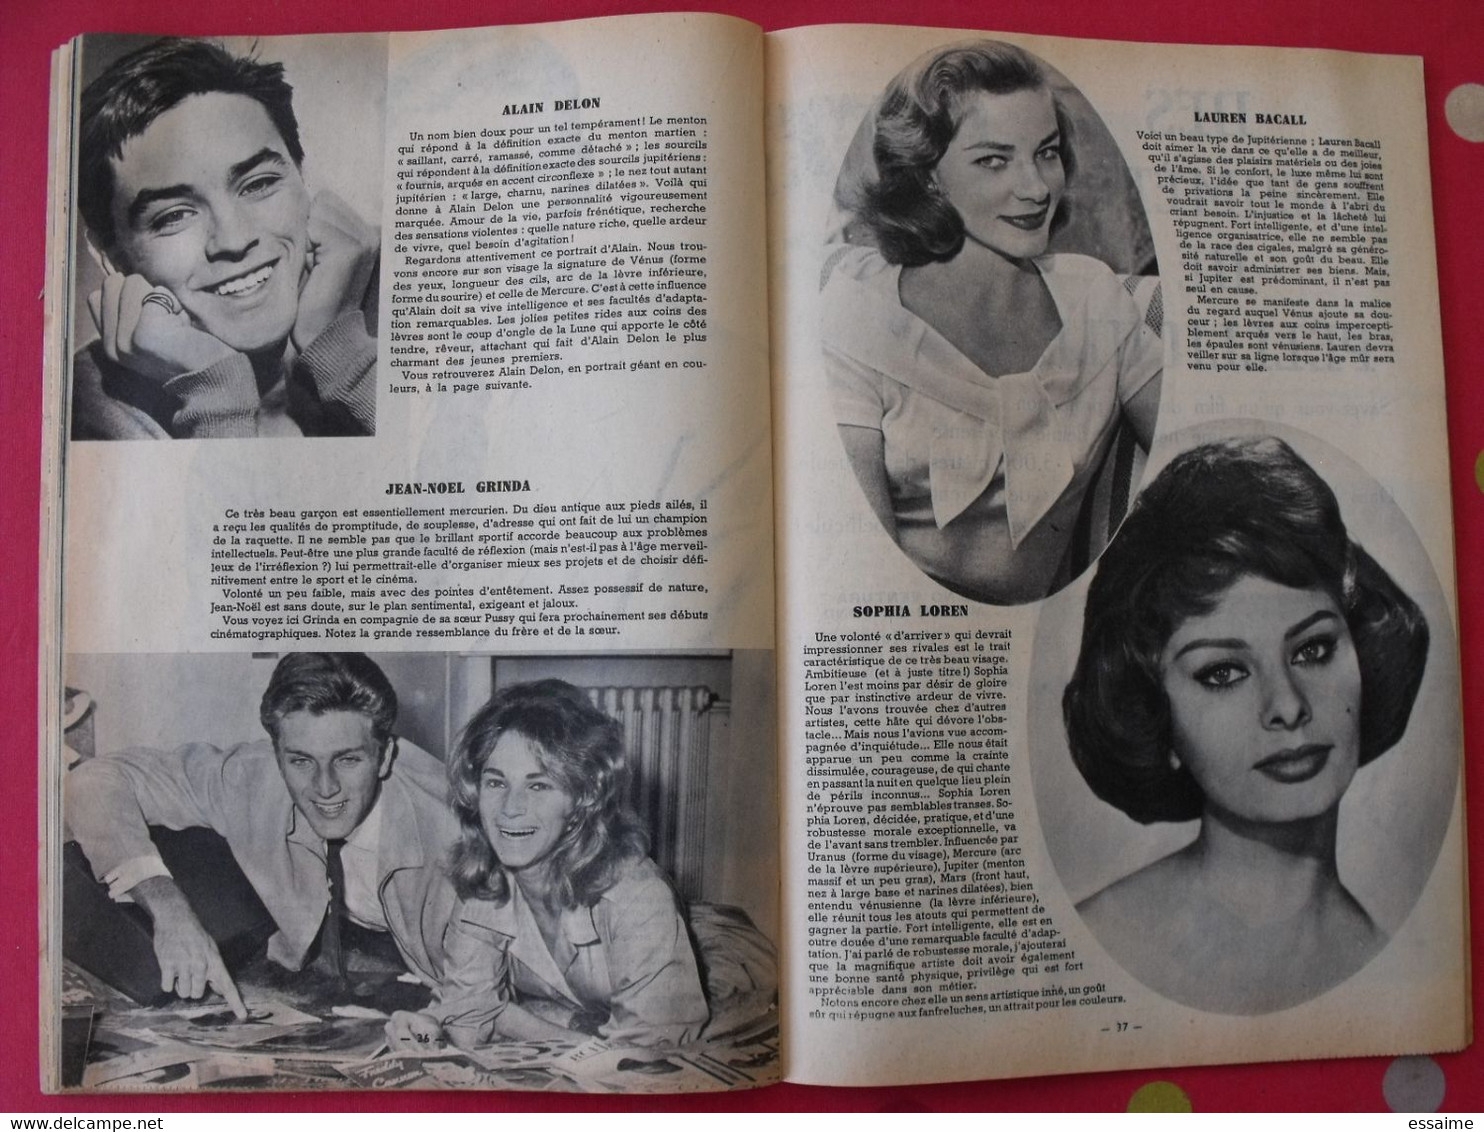 revue Jeunesse cinéma n° 33 de 1960. tony curtis françoise brion brigitte bardot dany robin brel alain delon (poster)